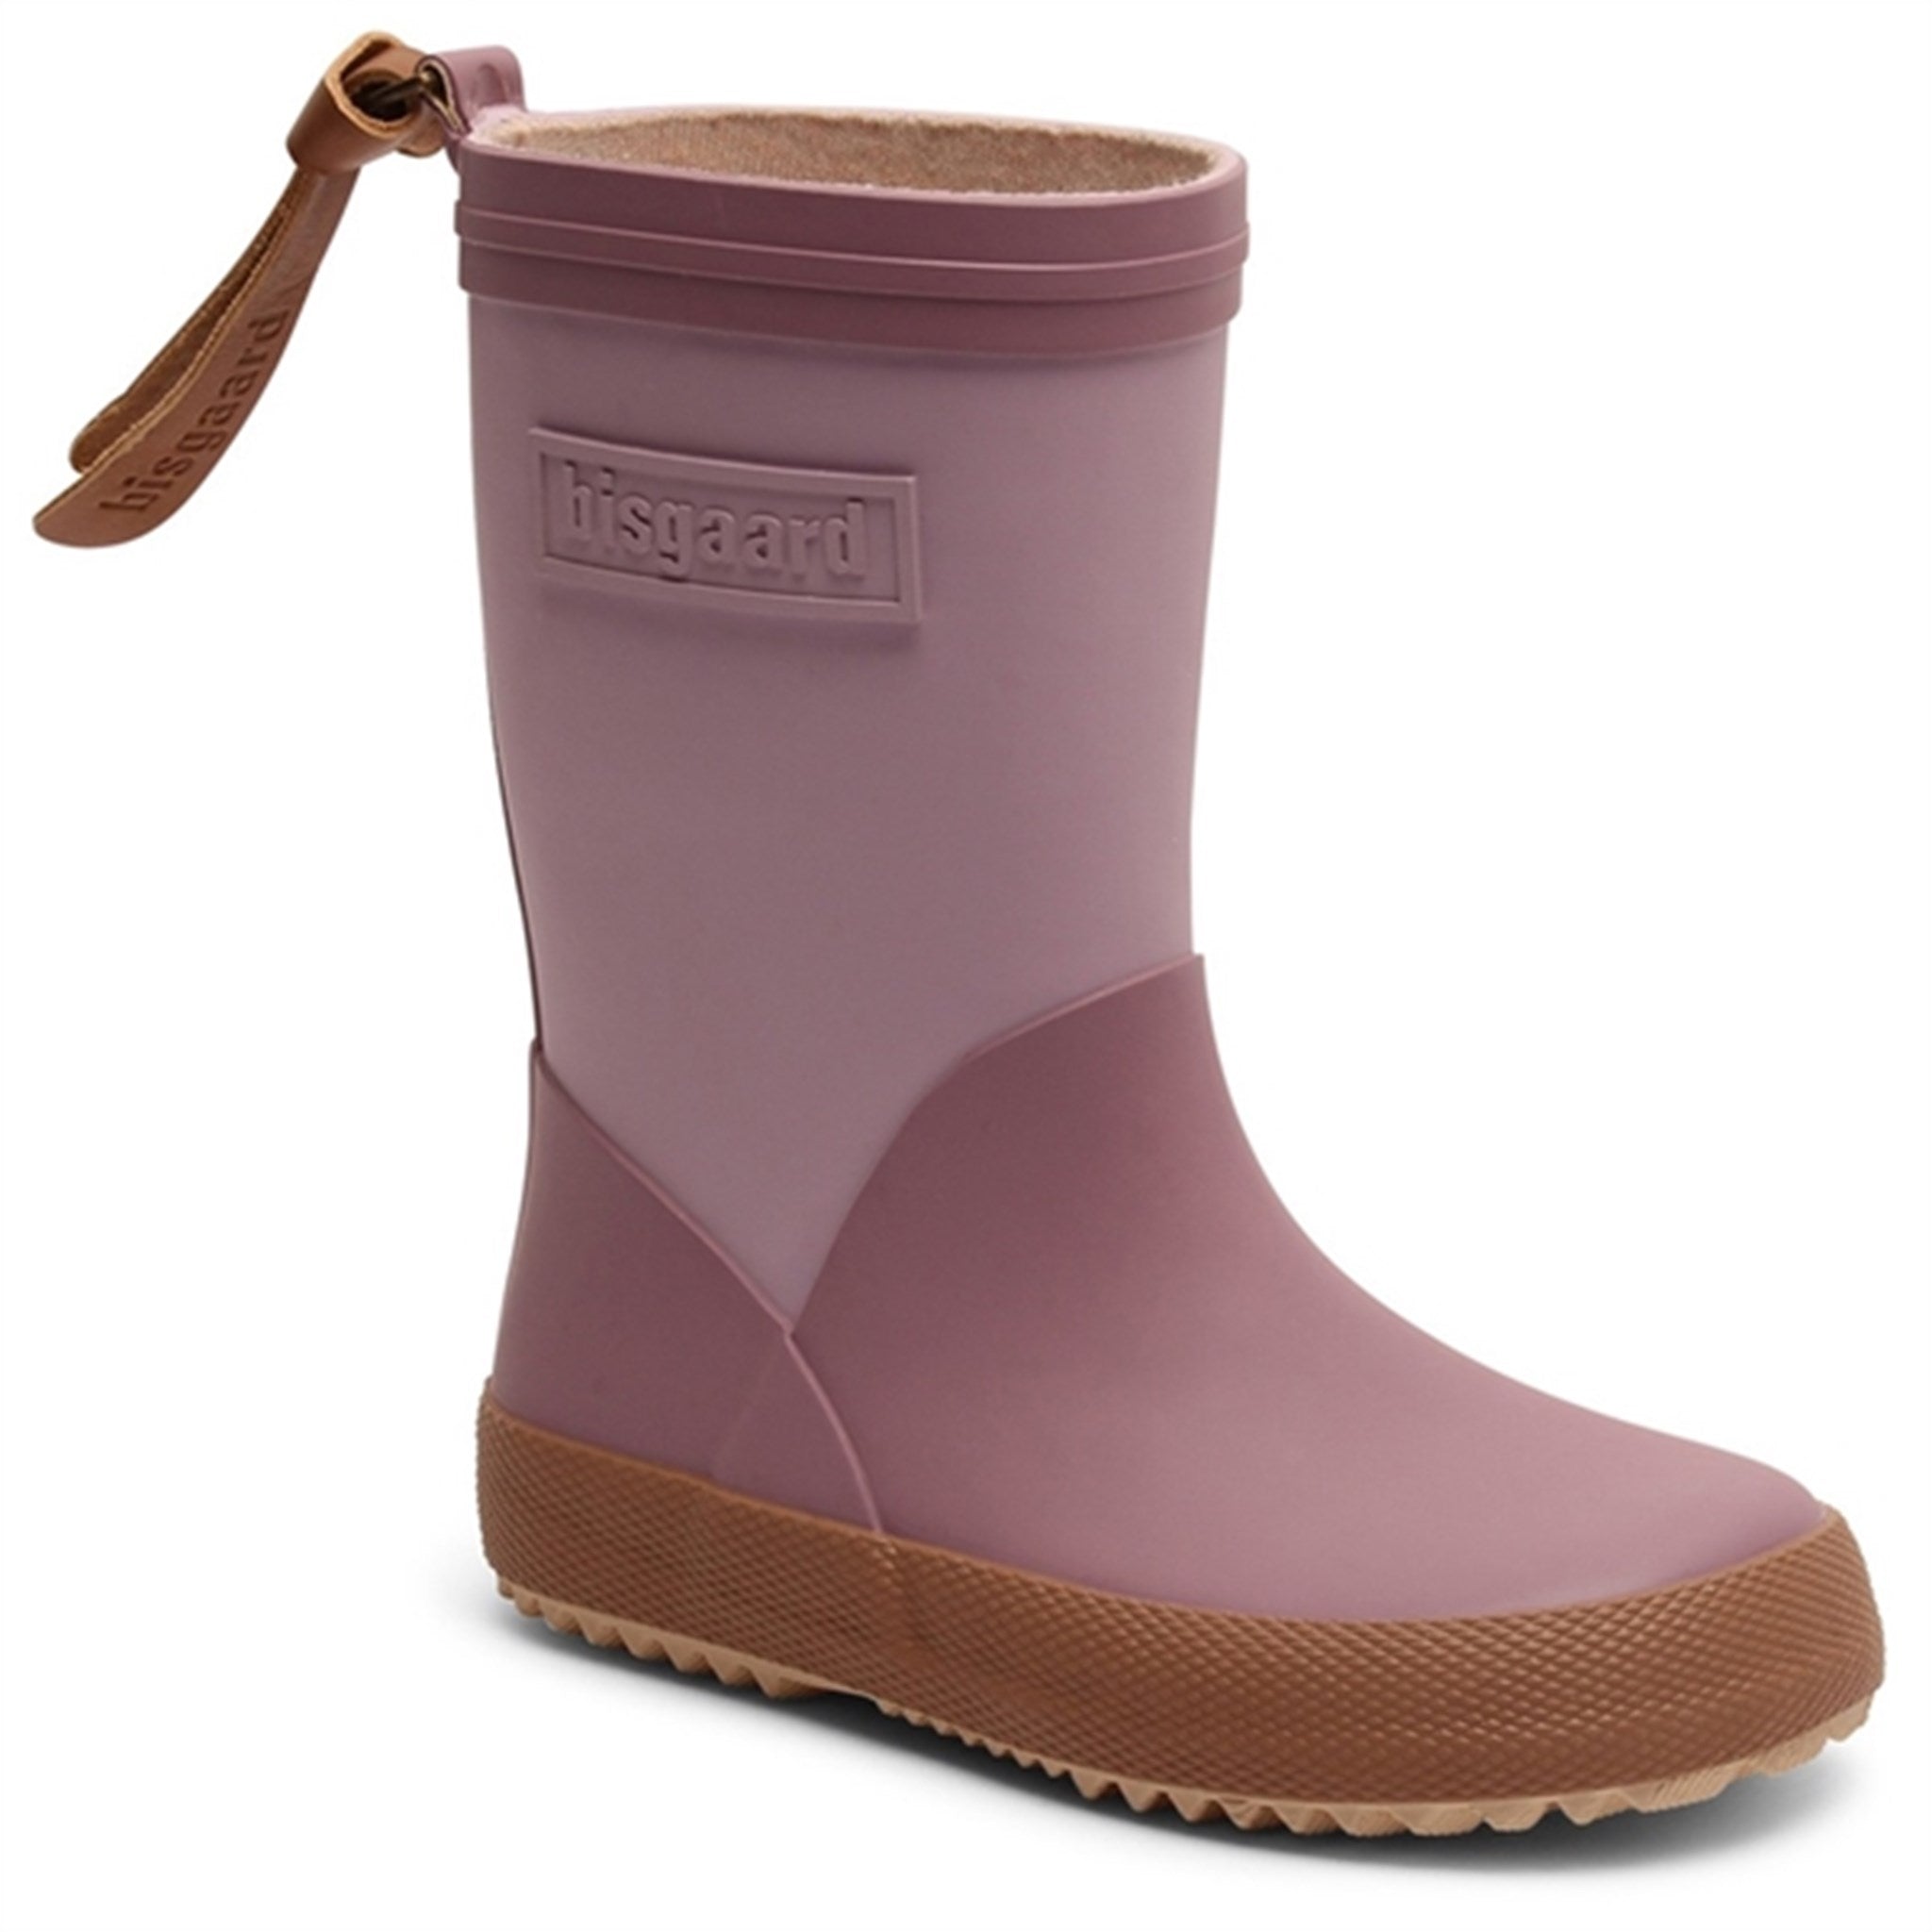 Bisgaard Rubber Boots Fashion II Lavender